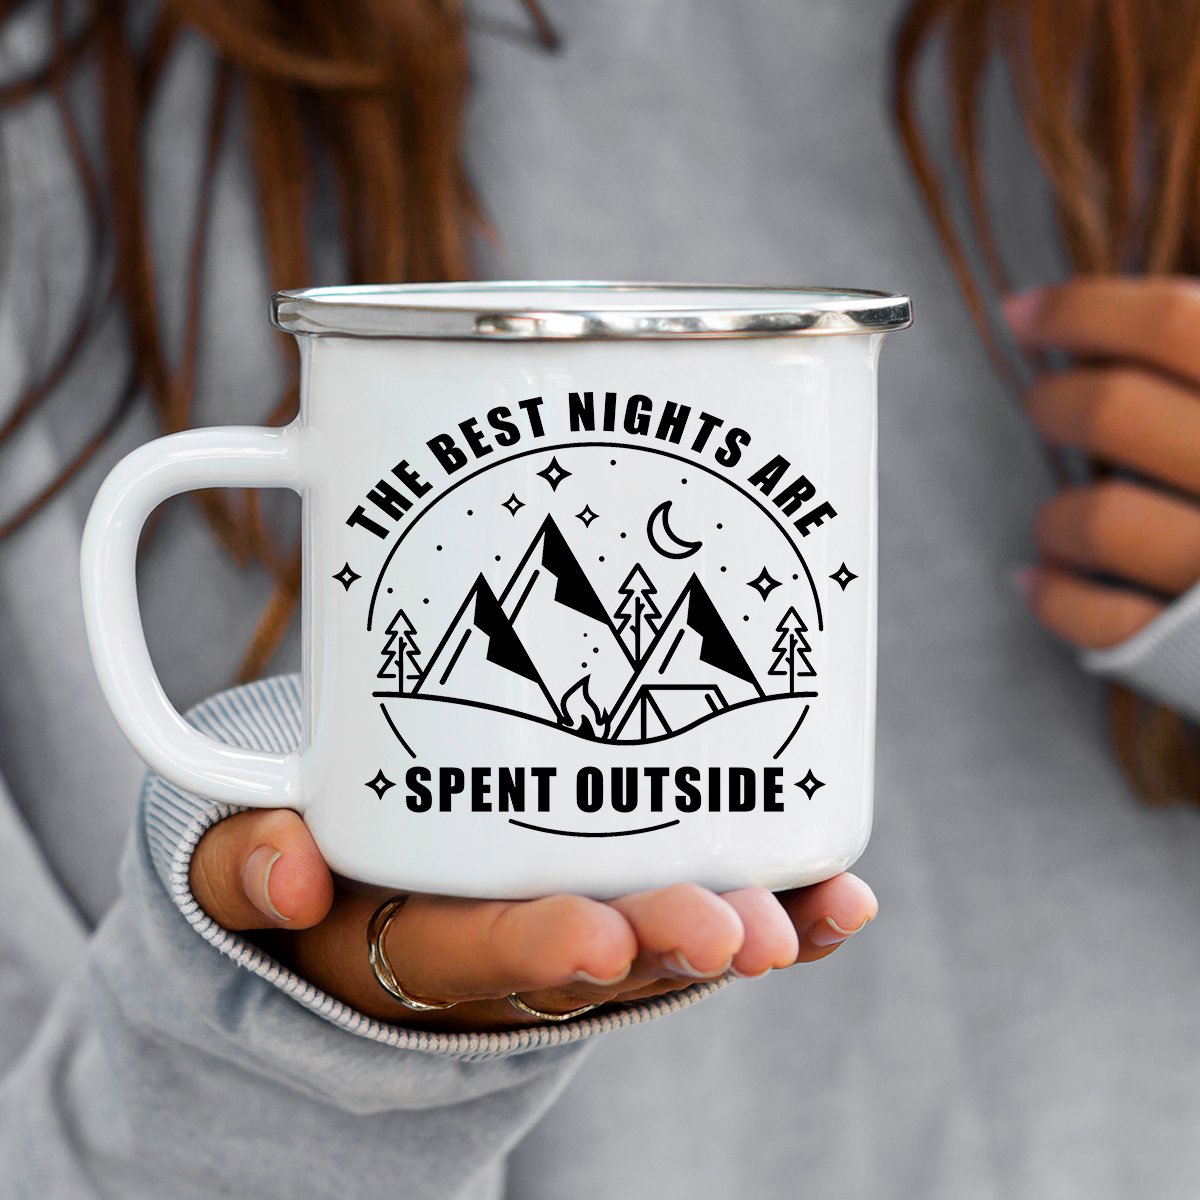 https://simplymadefun.com/wp-content/uploads/2022/08/camping-outside-coffee-mug.jpg